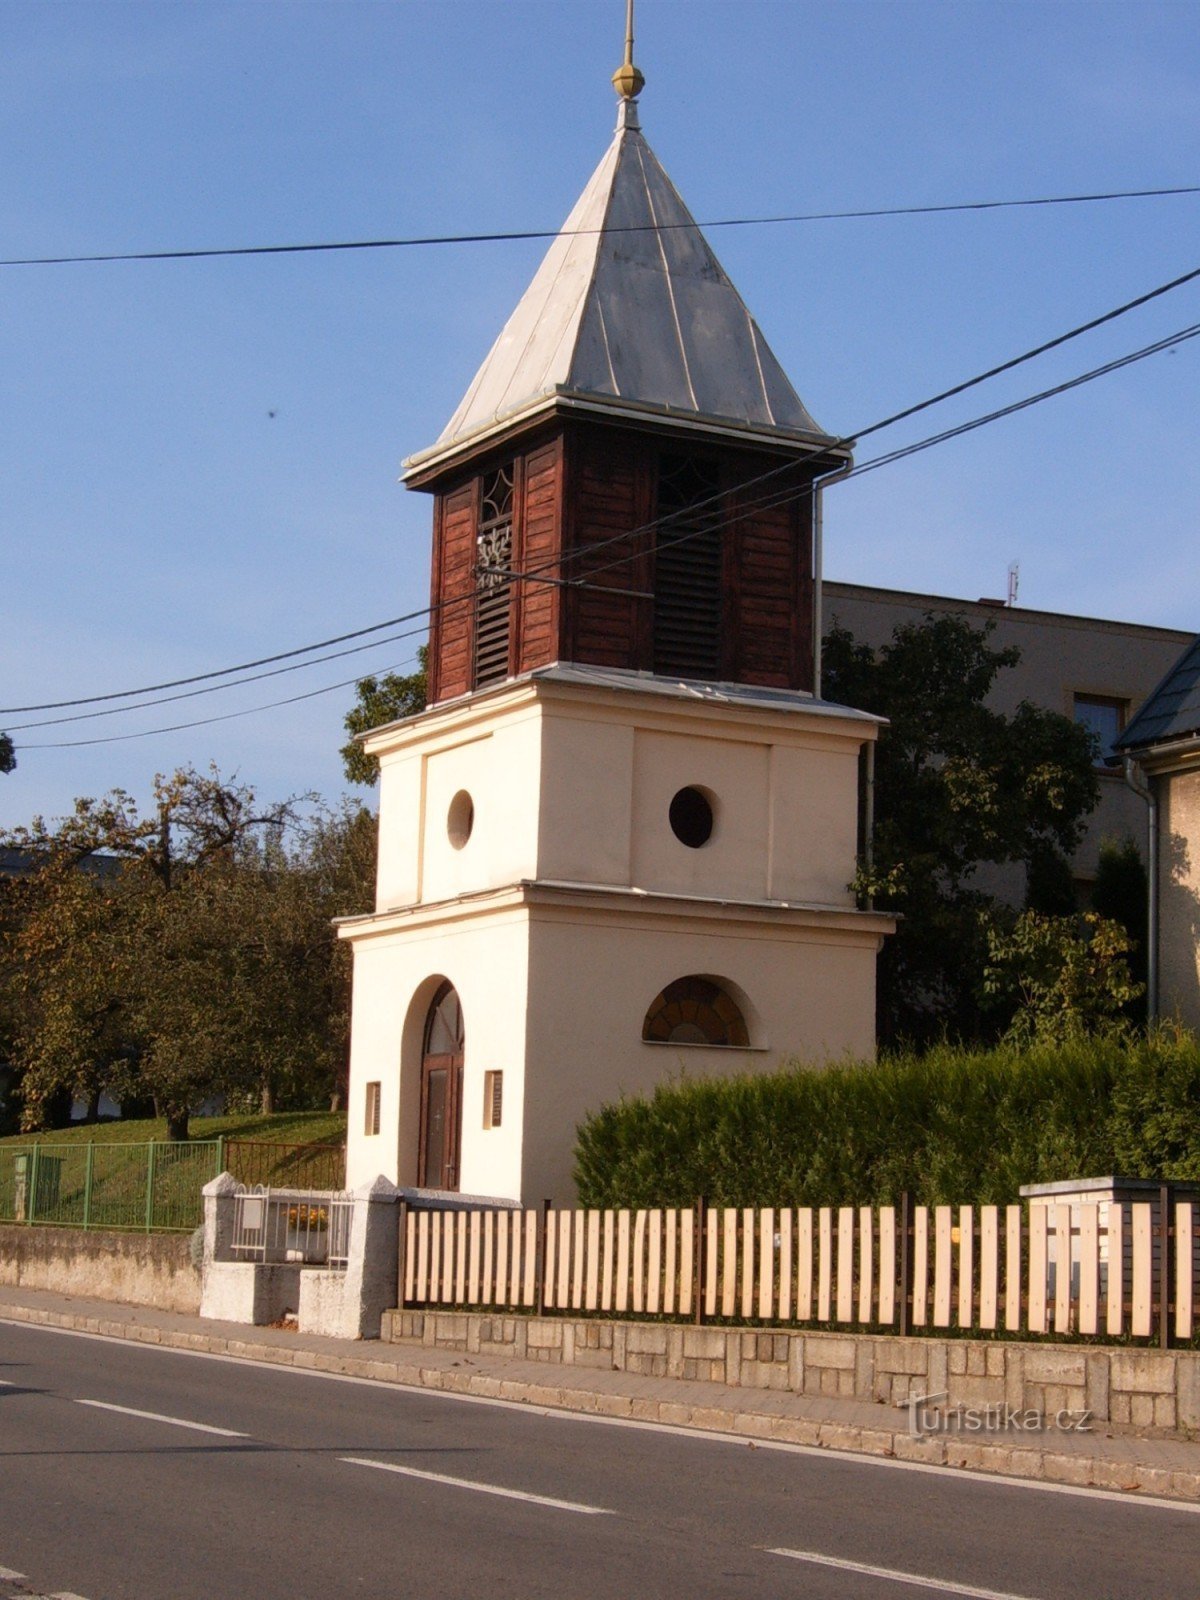 Martin's belfry